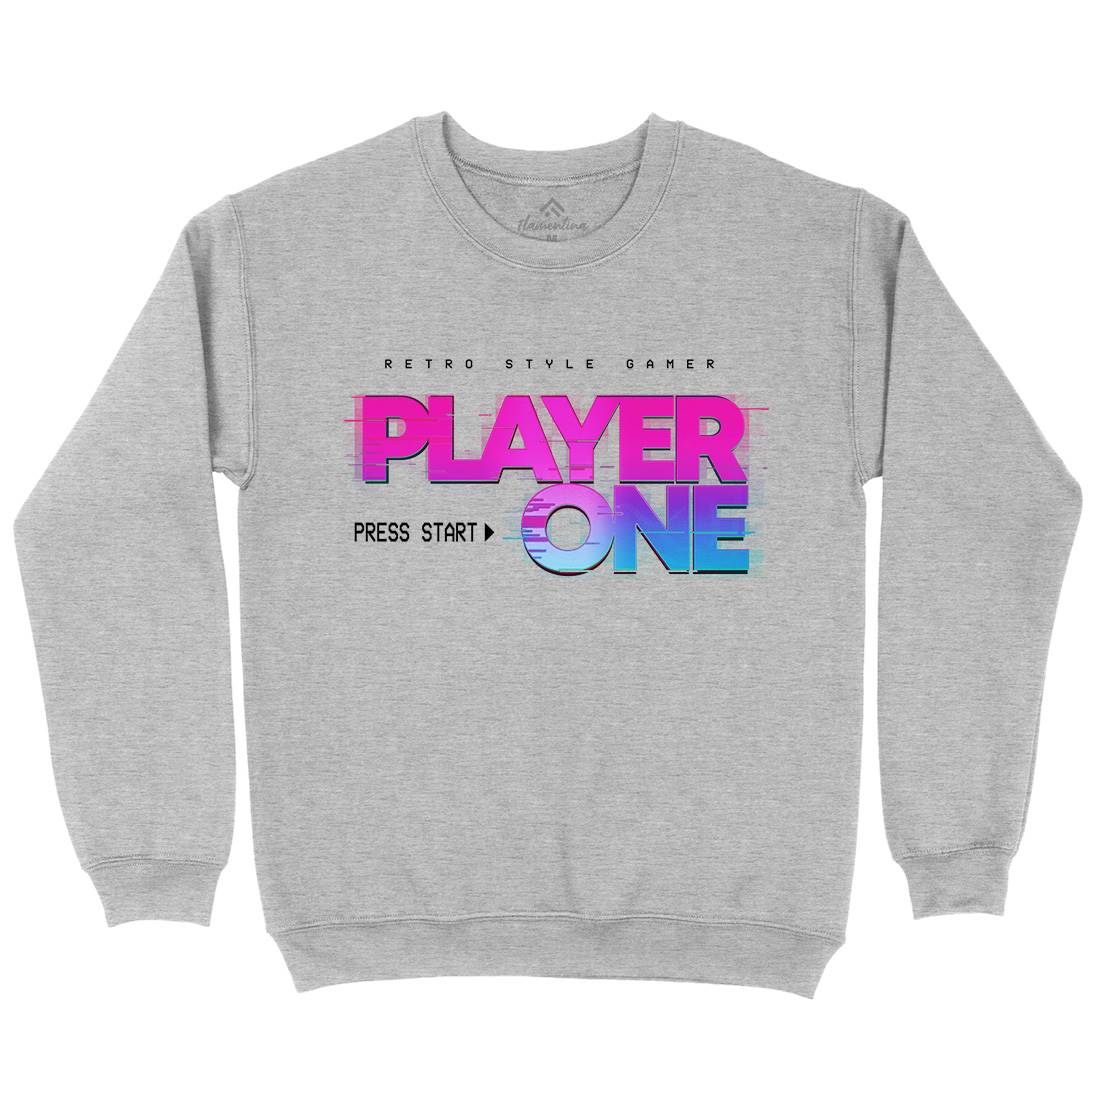 Player One Kids Crew Neck Sweatshirt Geek B997